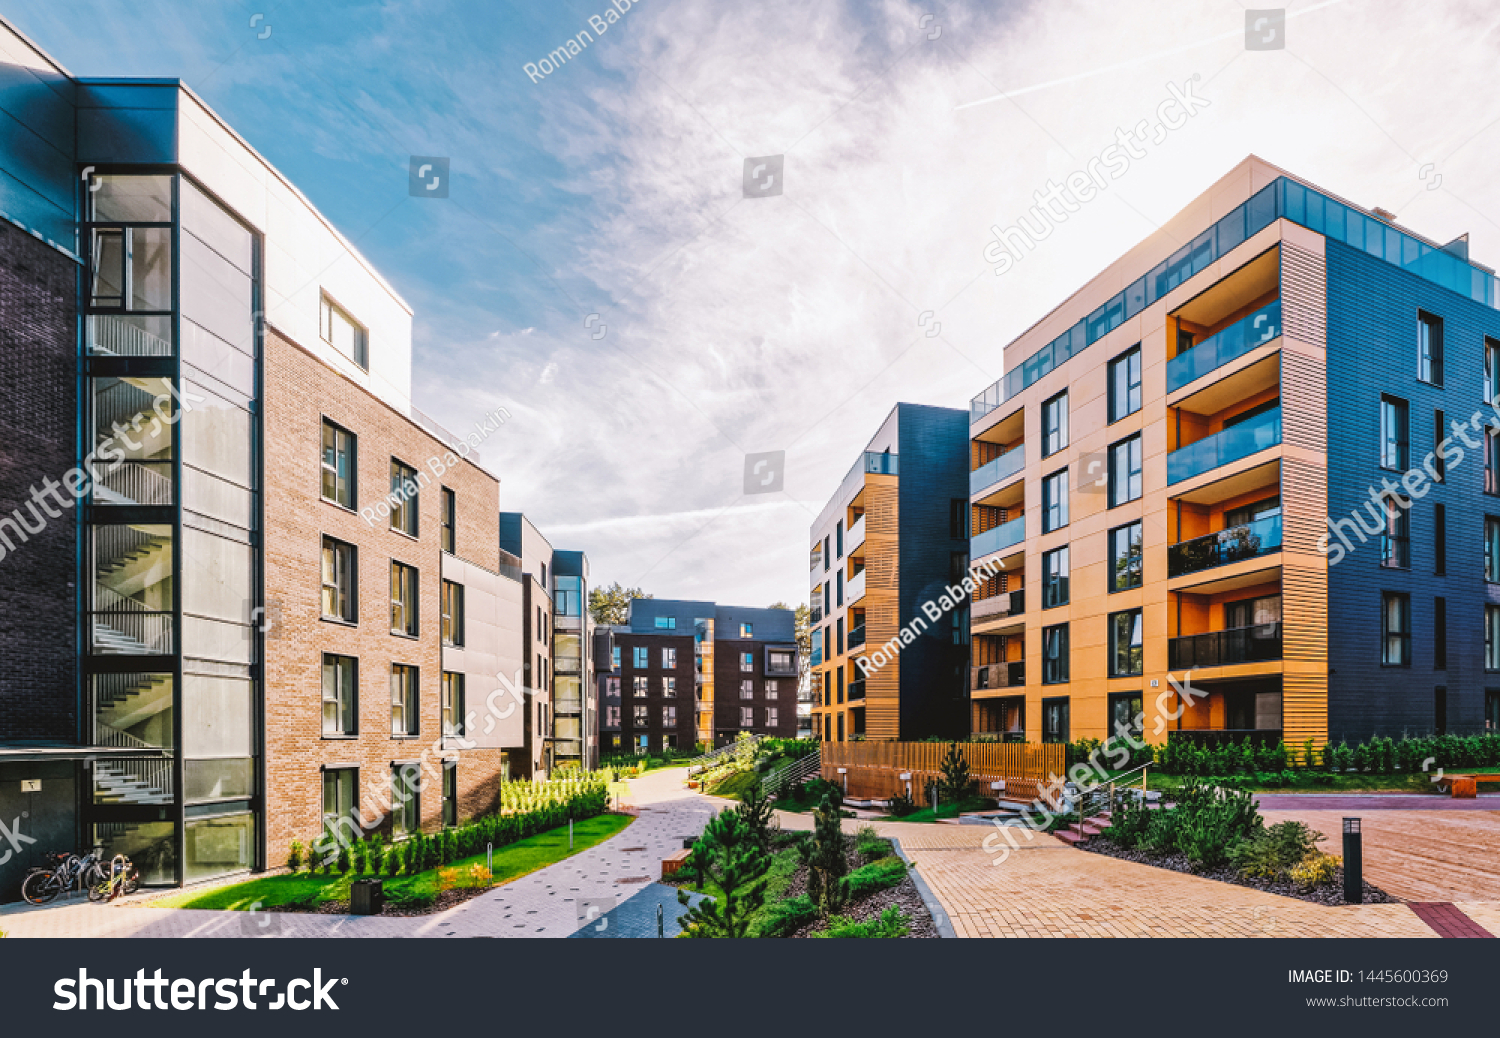 EU Modern european complex of apartment buildings. And outdoor facilities. Mixed media. #1445600369